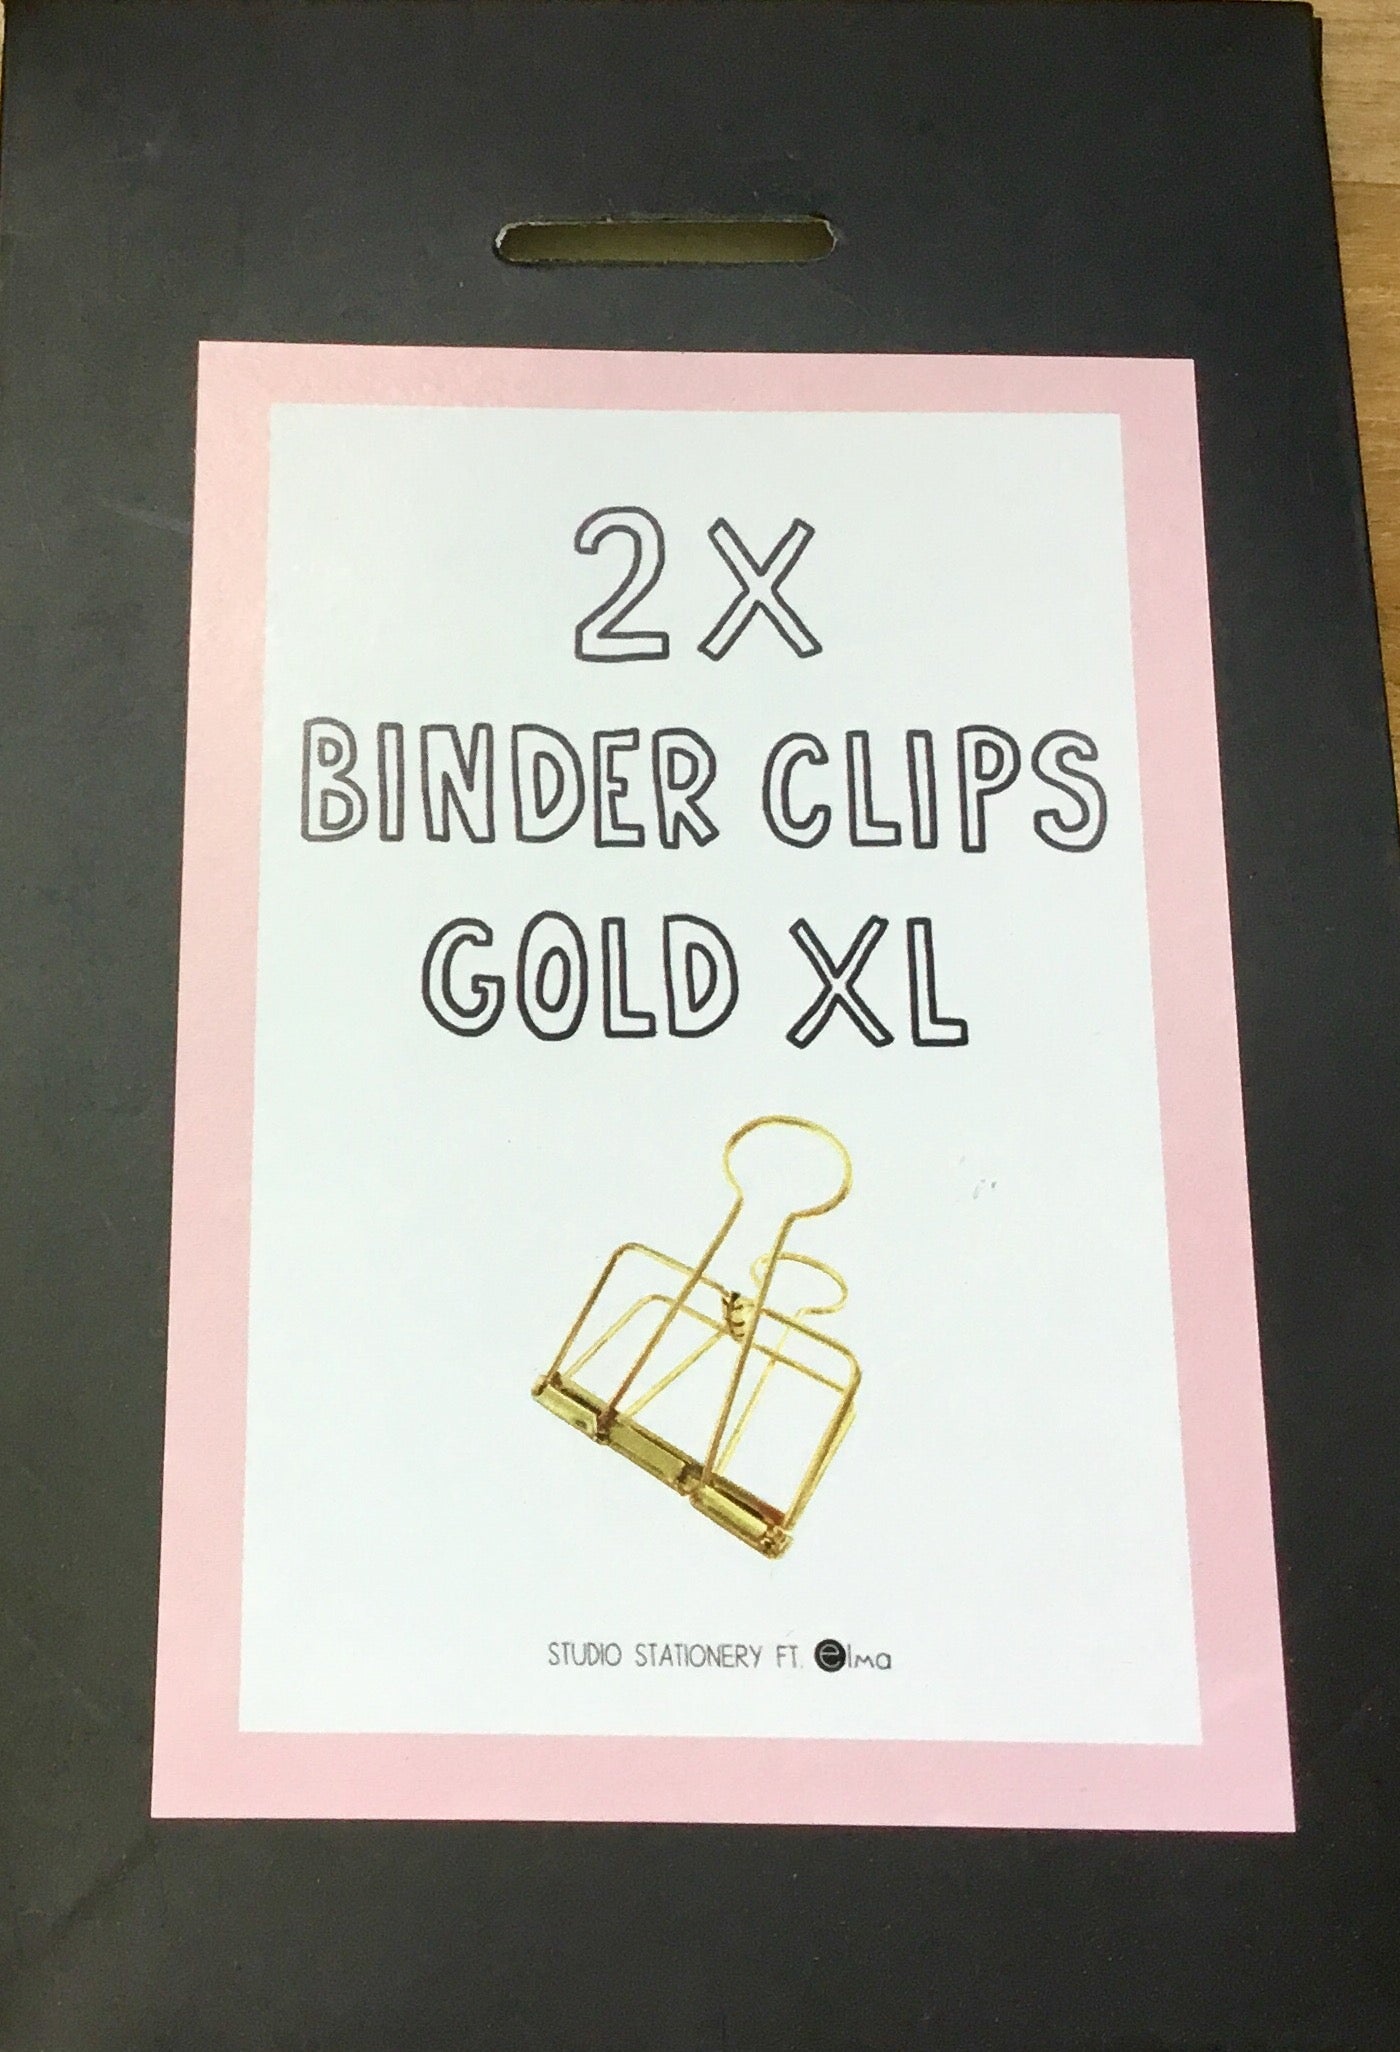 packaging of golden binder clips designed by Studio Stationary